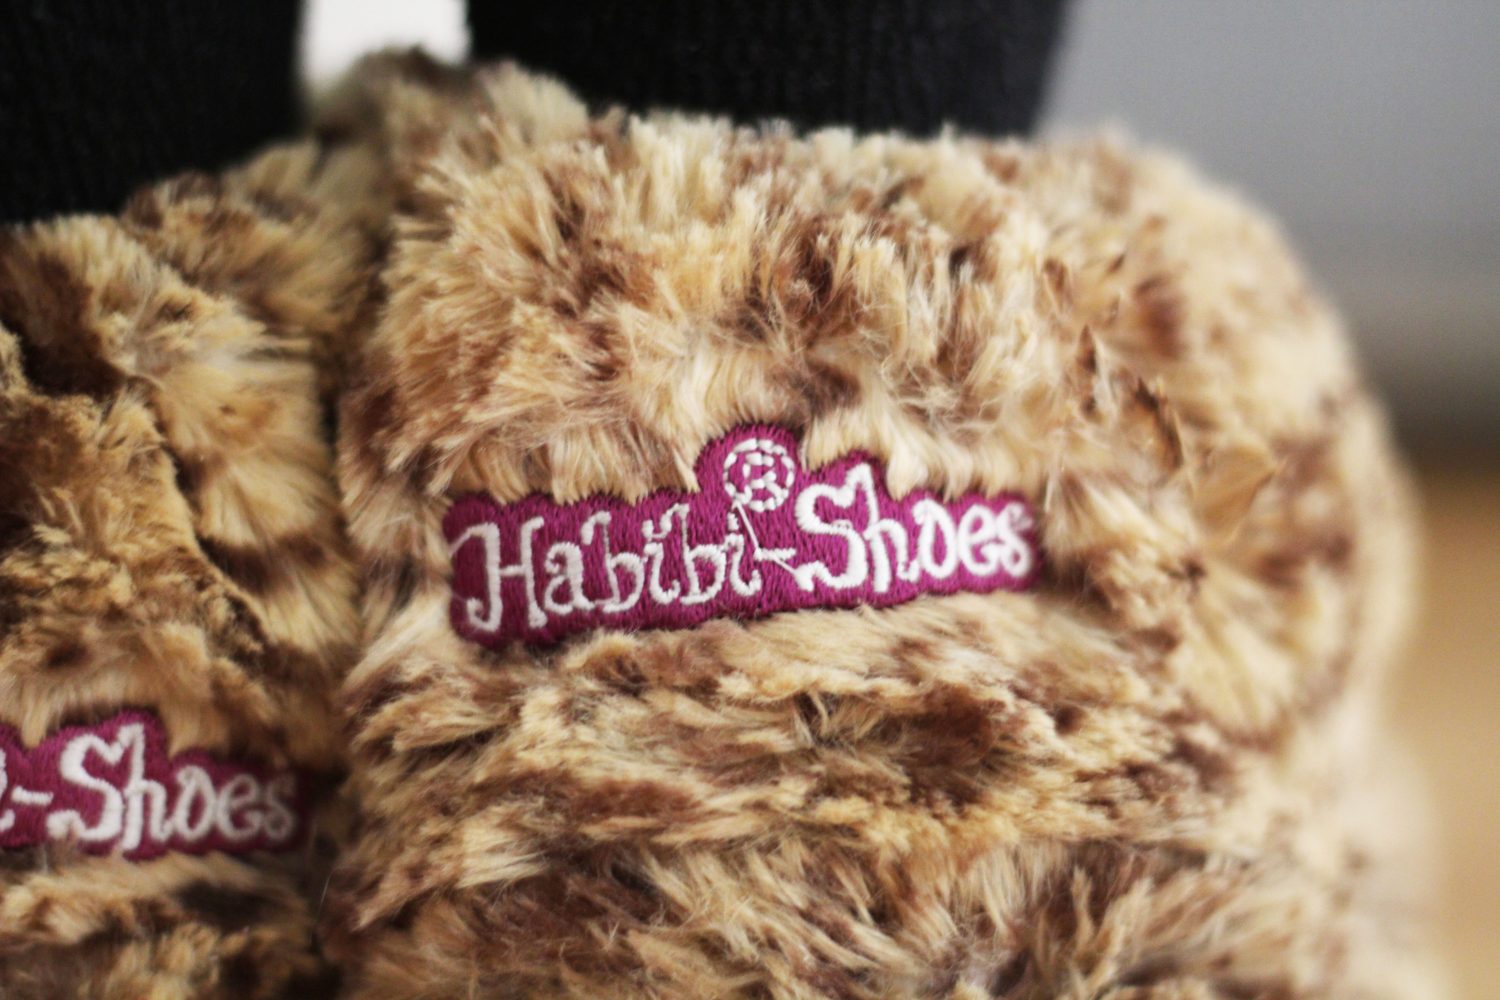 Habibi Shoes